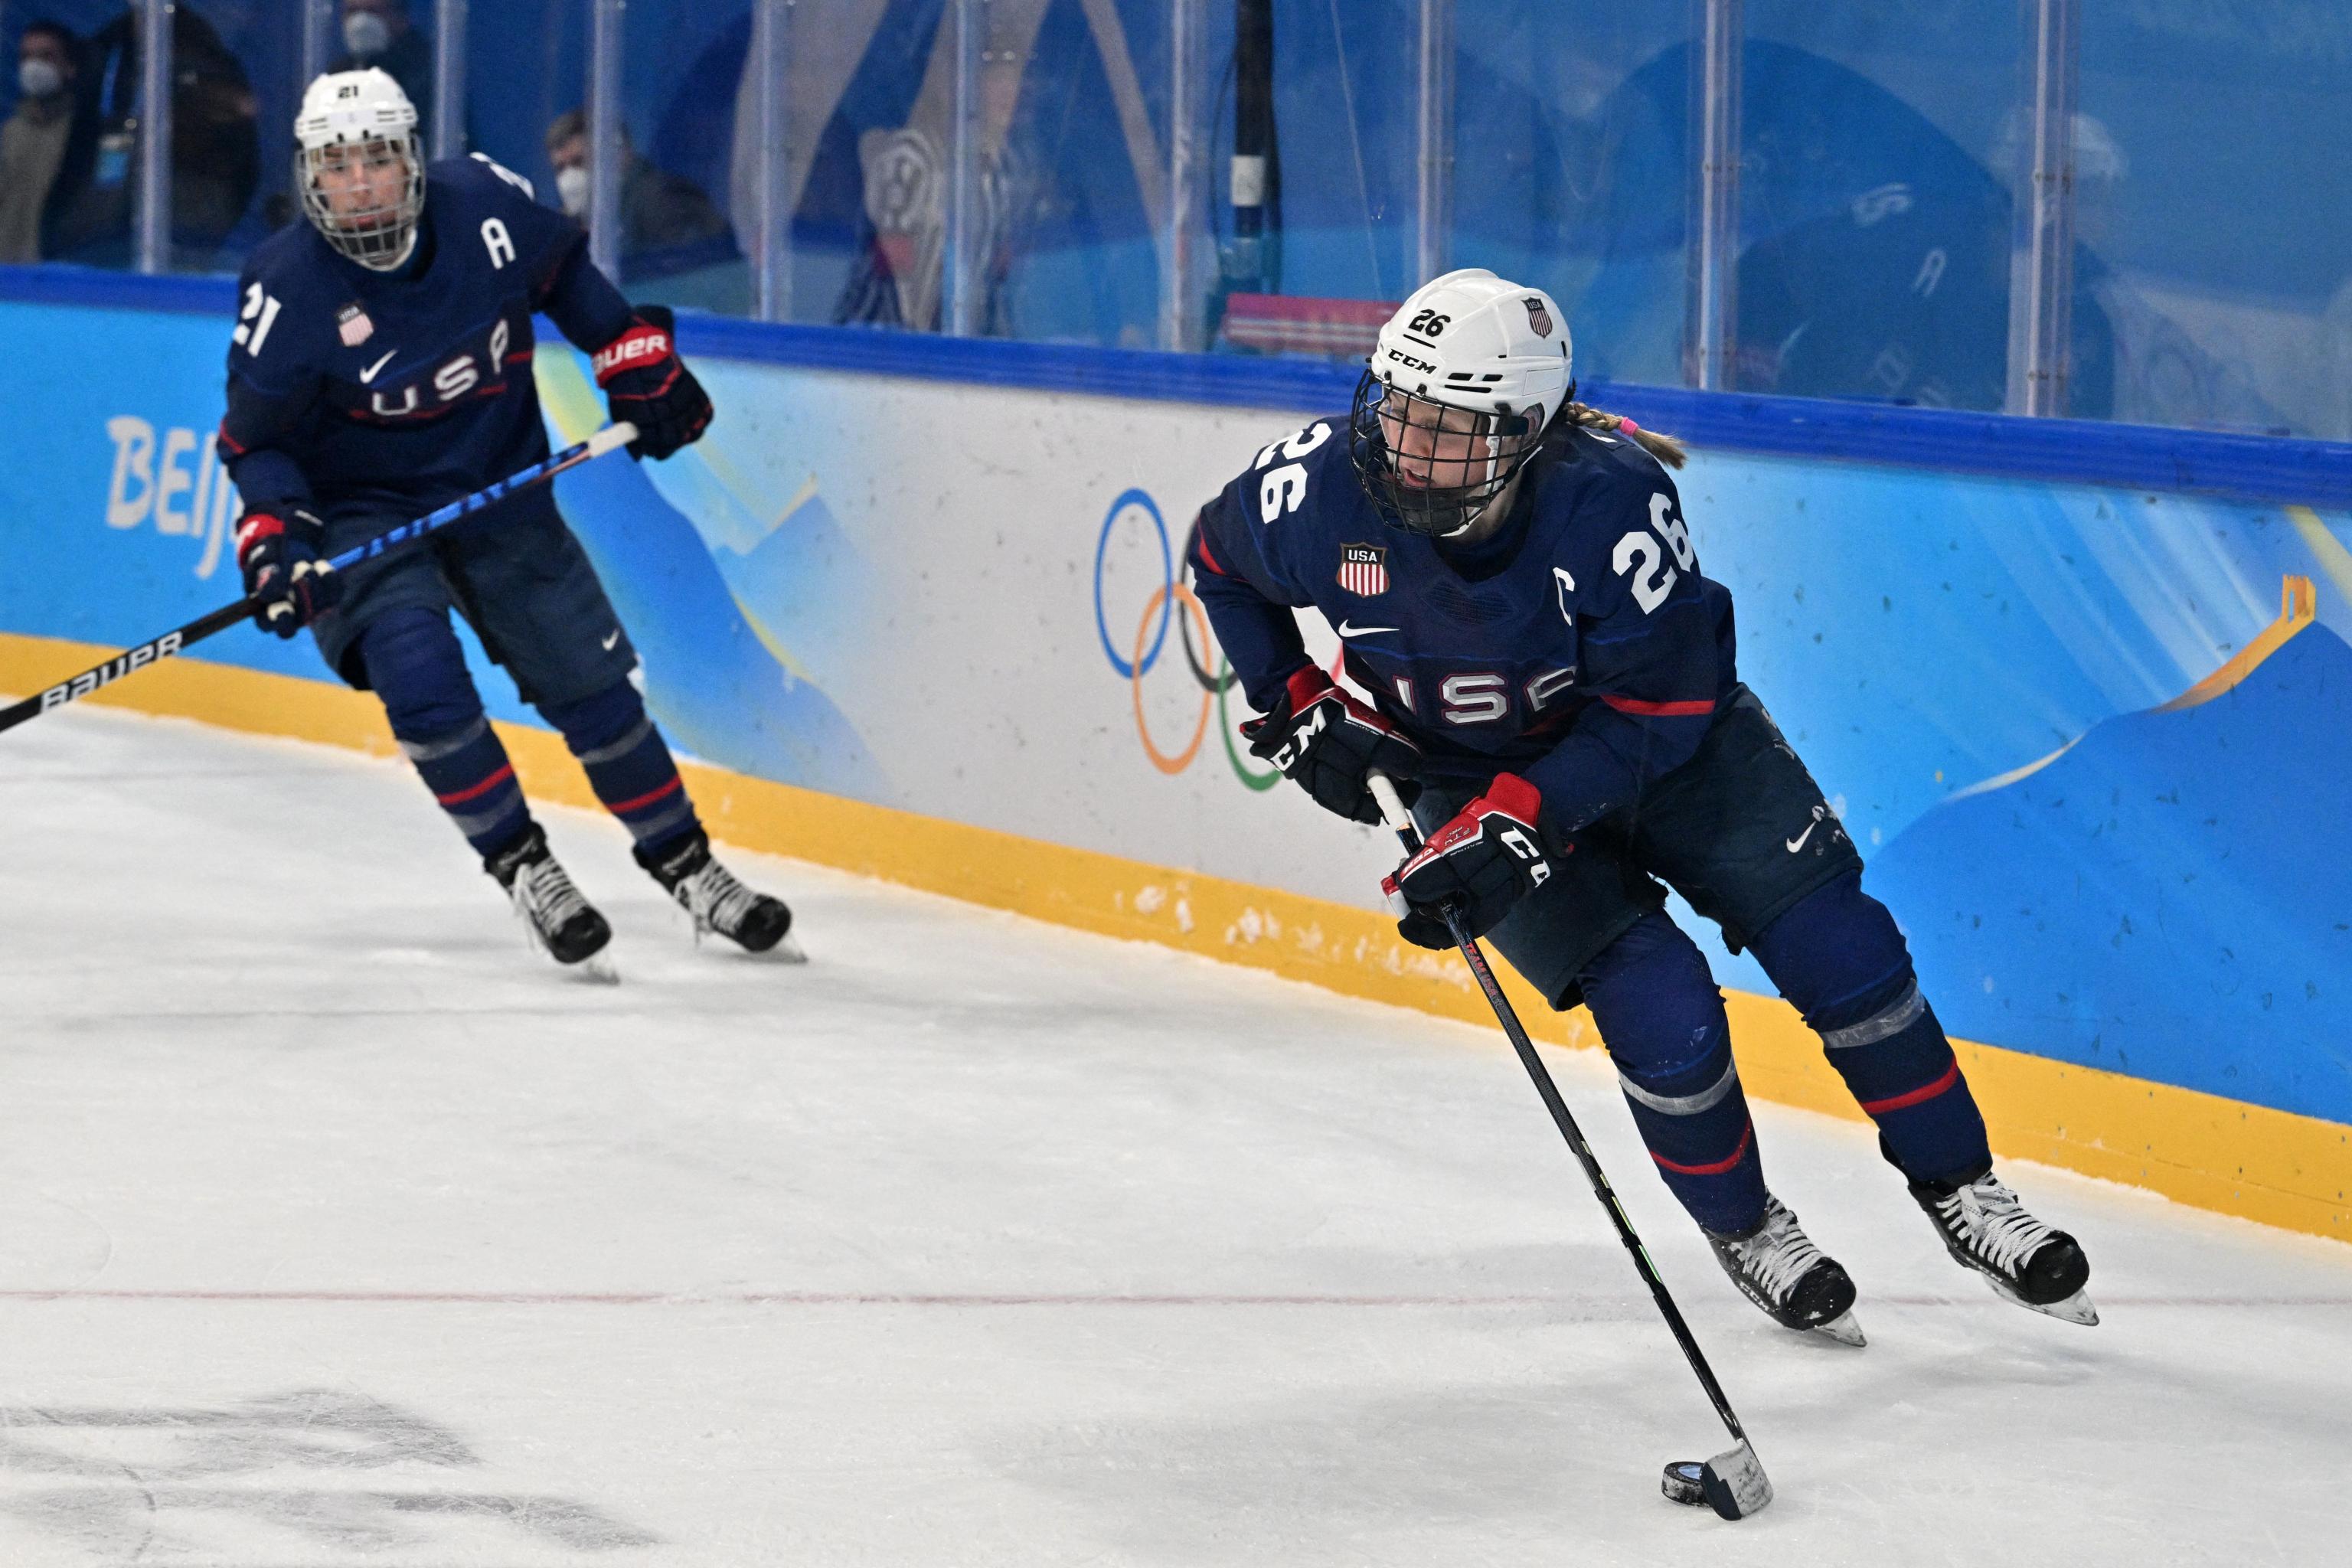 Usa Vs Switzerland Women S Hockey Live Stream Schedule Odds Bleacher Report Latest News Videos And Highlights